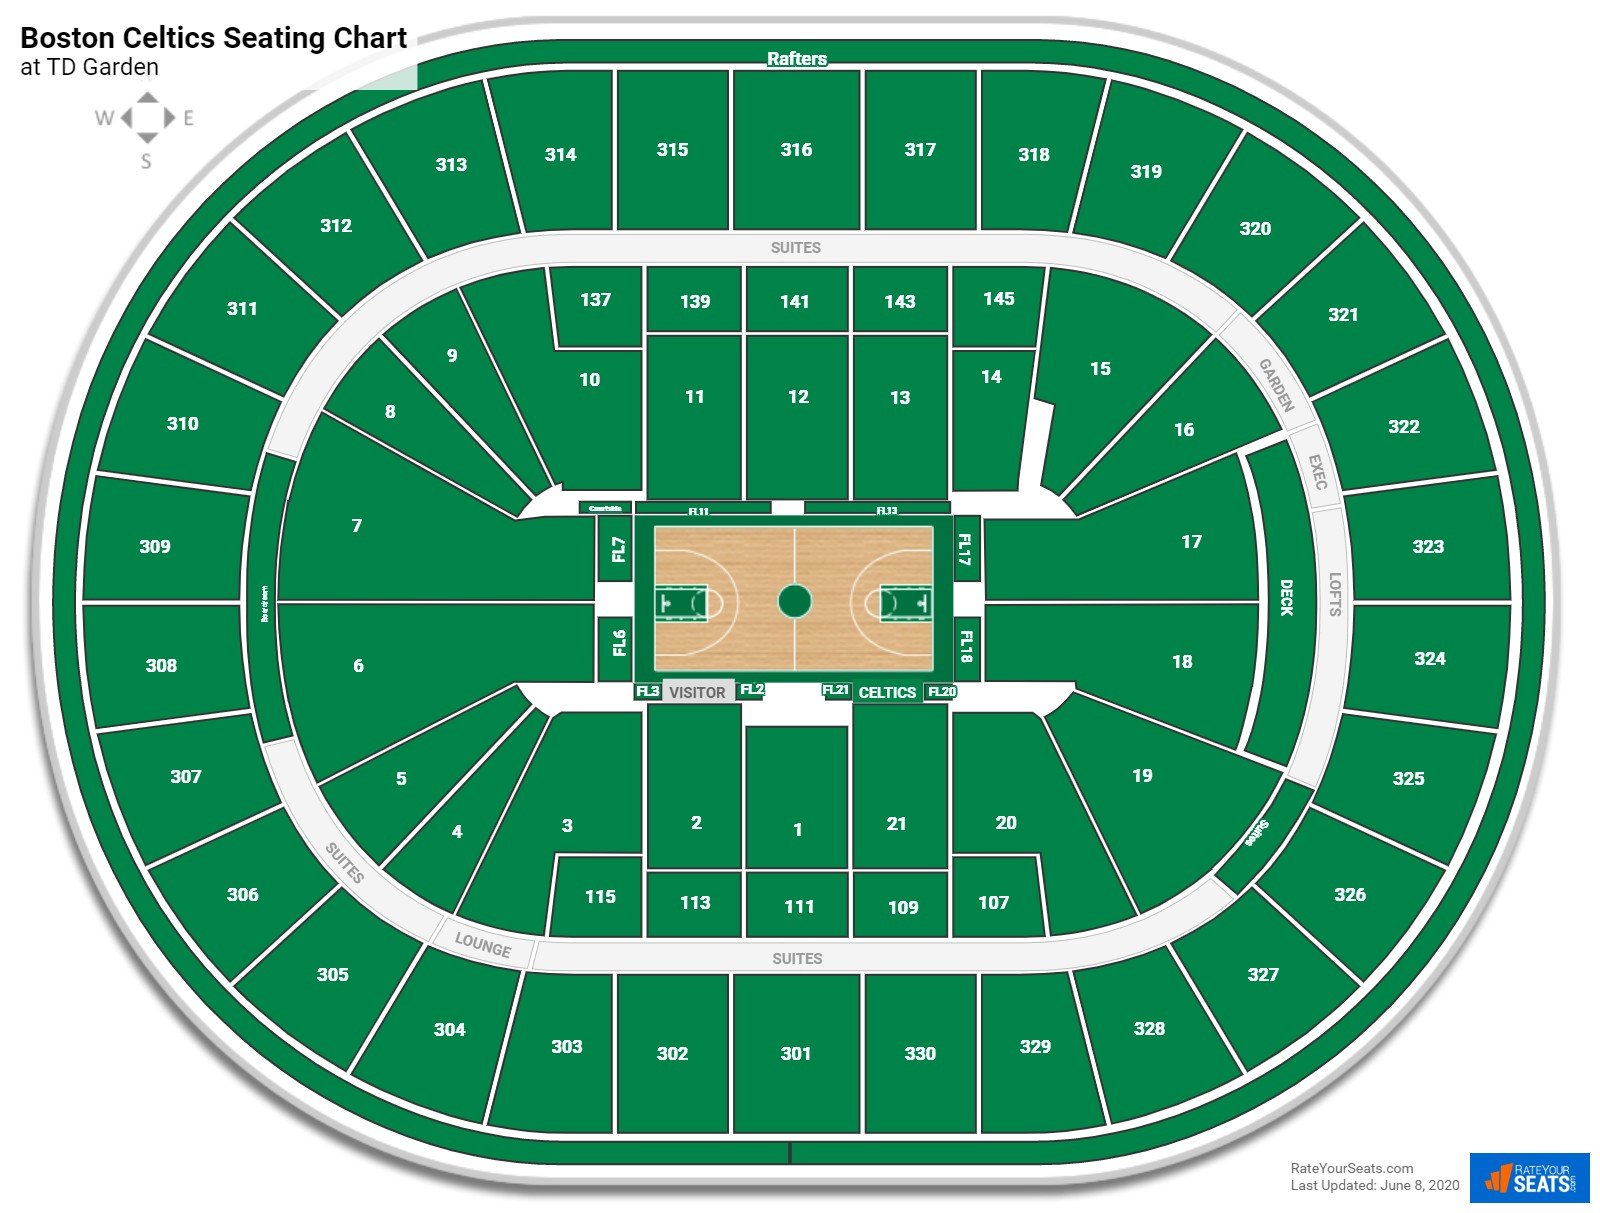 Boston Celtics Seating Charts At Td Garden Rateyourseats Com